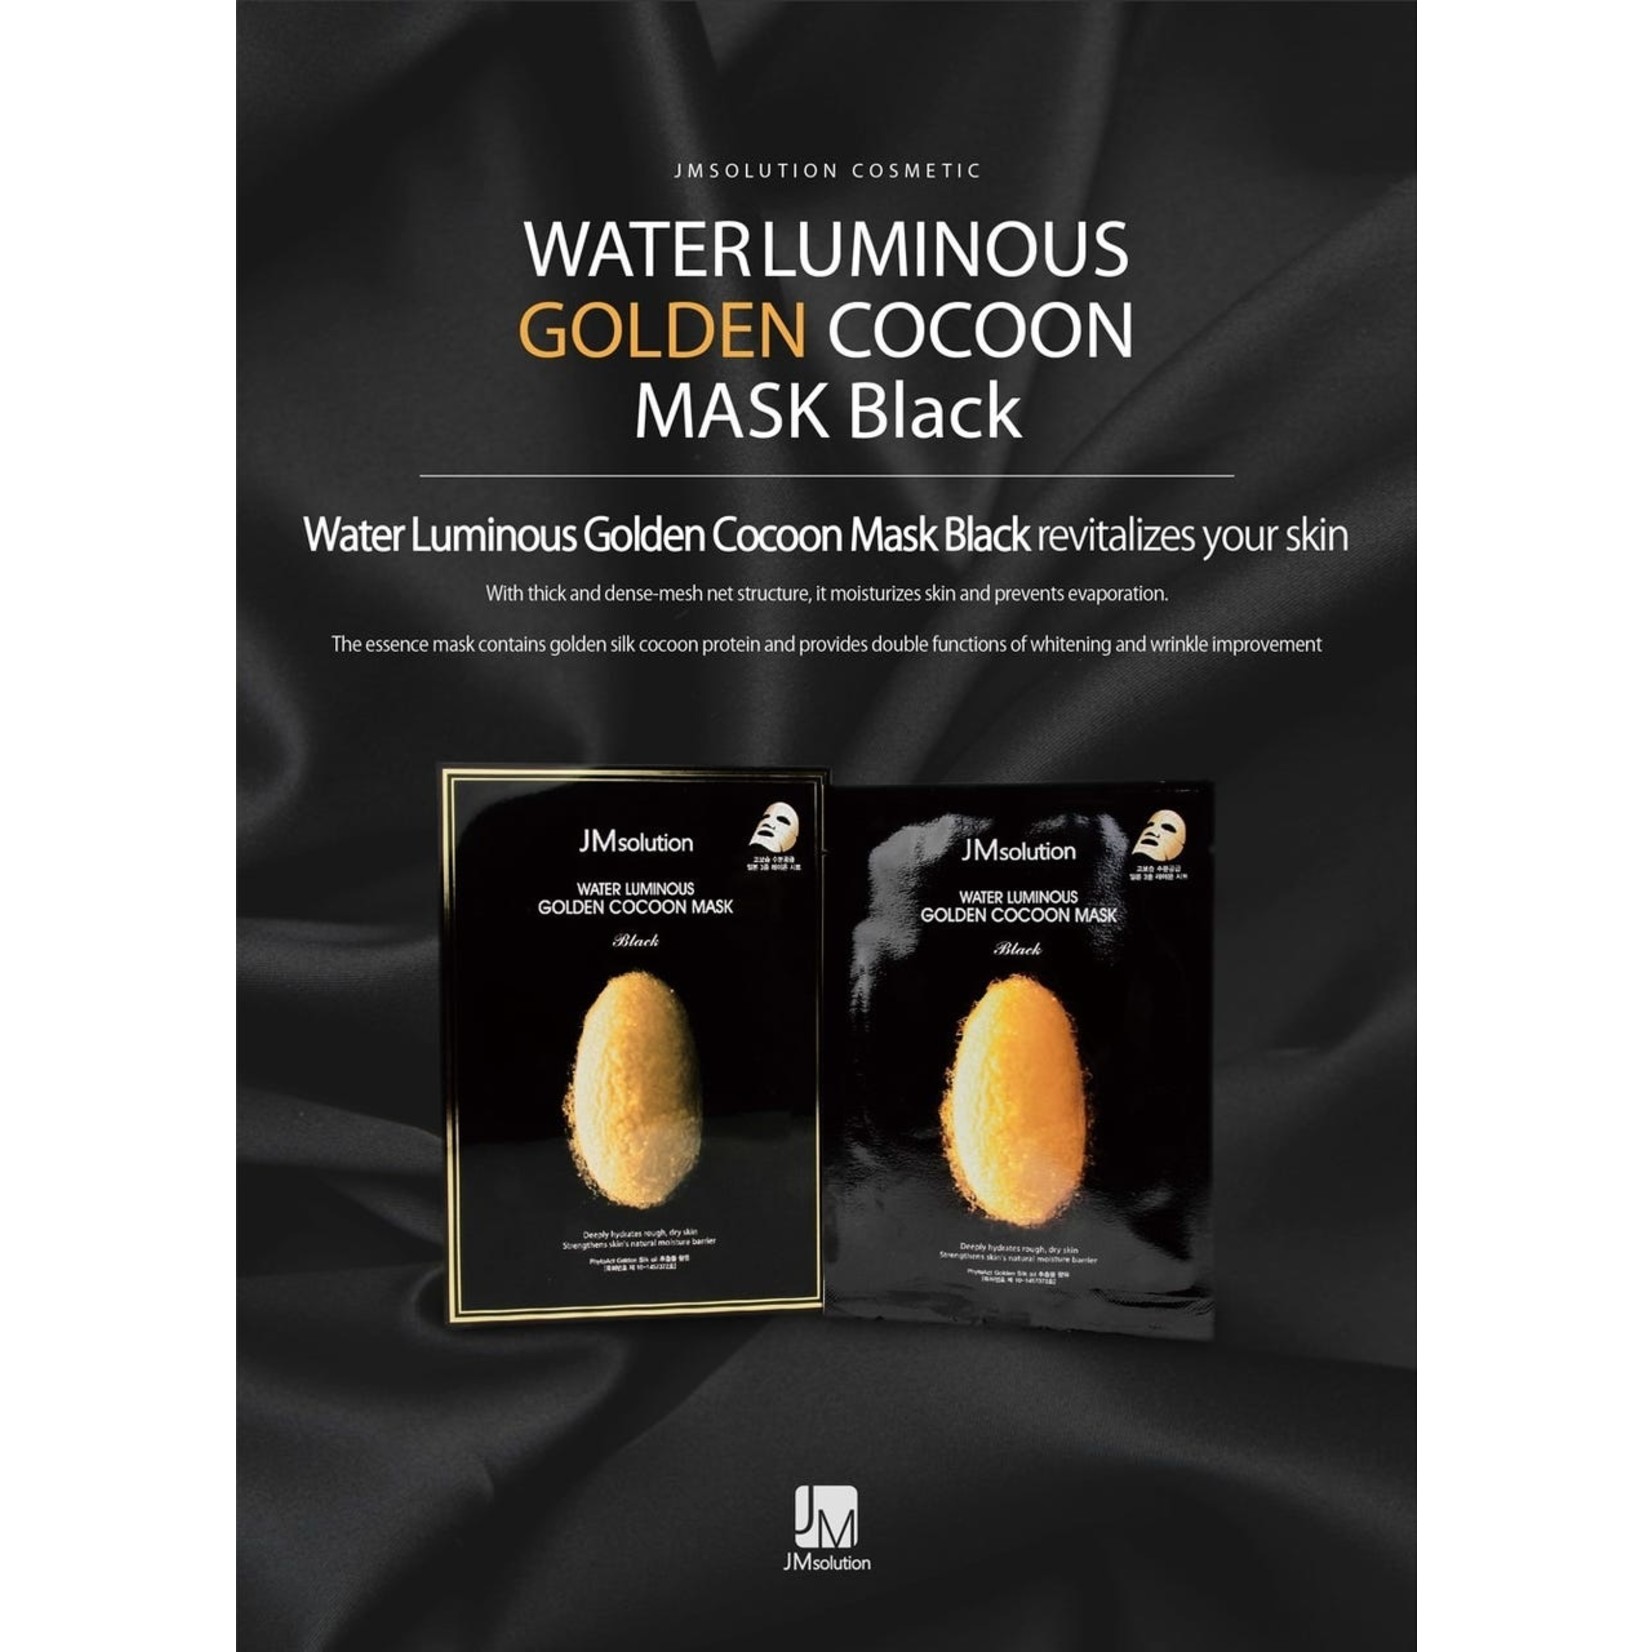 JMsolution Water Luminous Golden Cocoon Mask Black